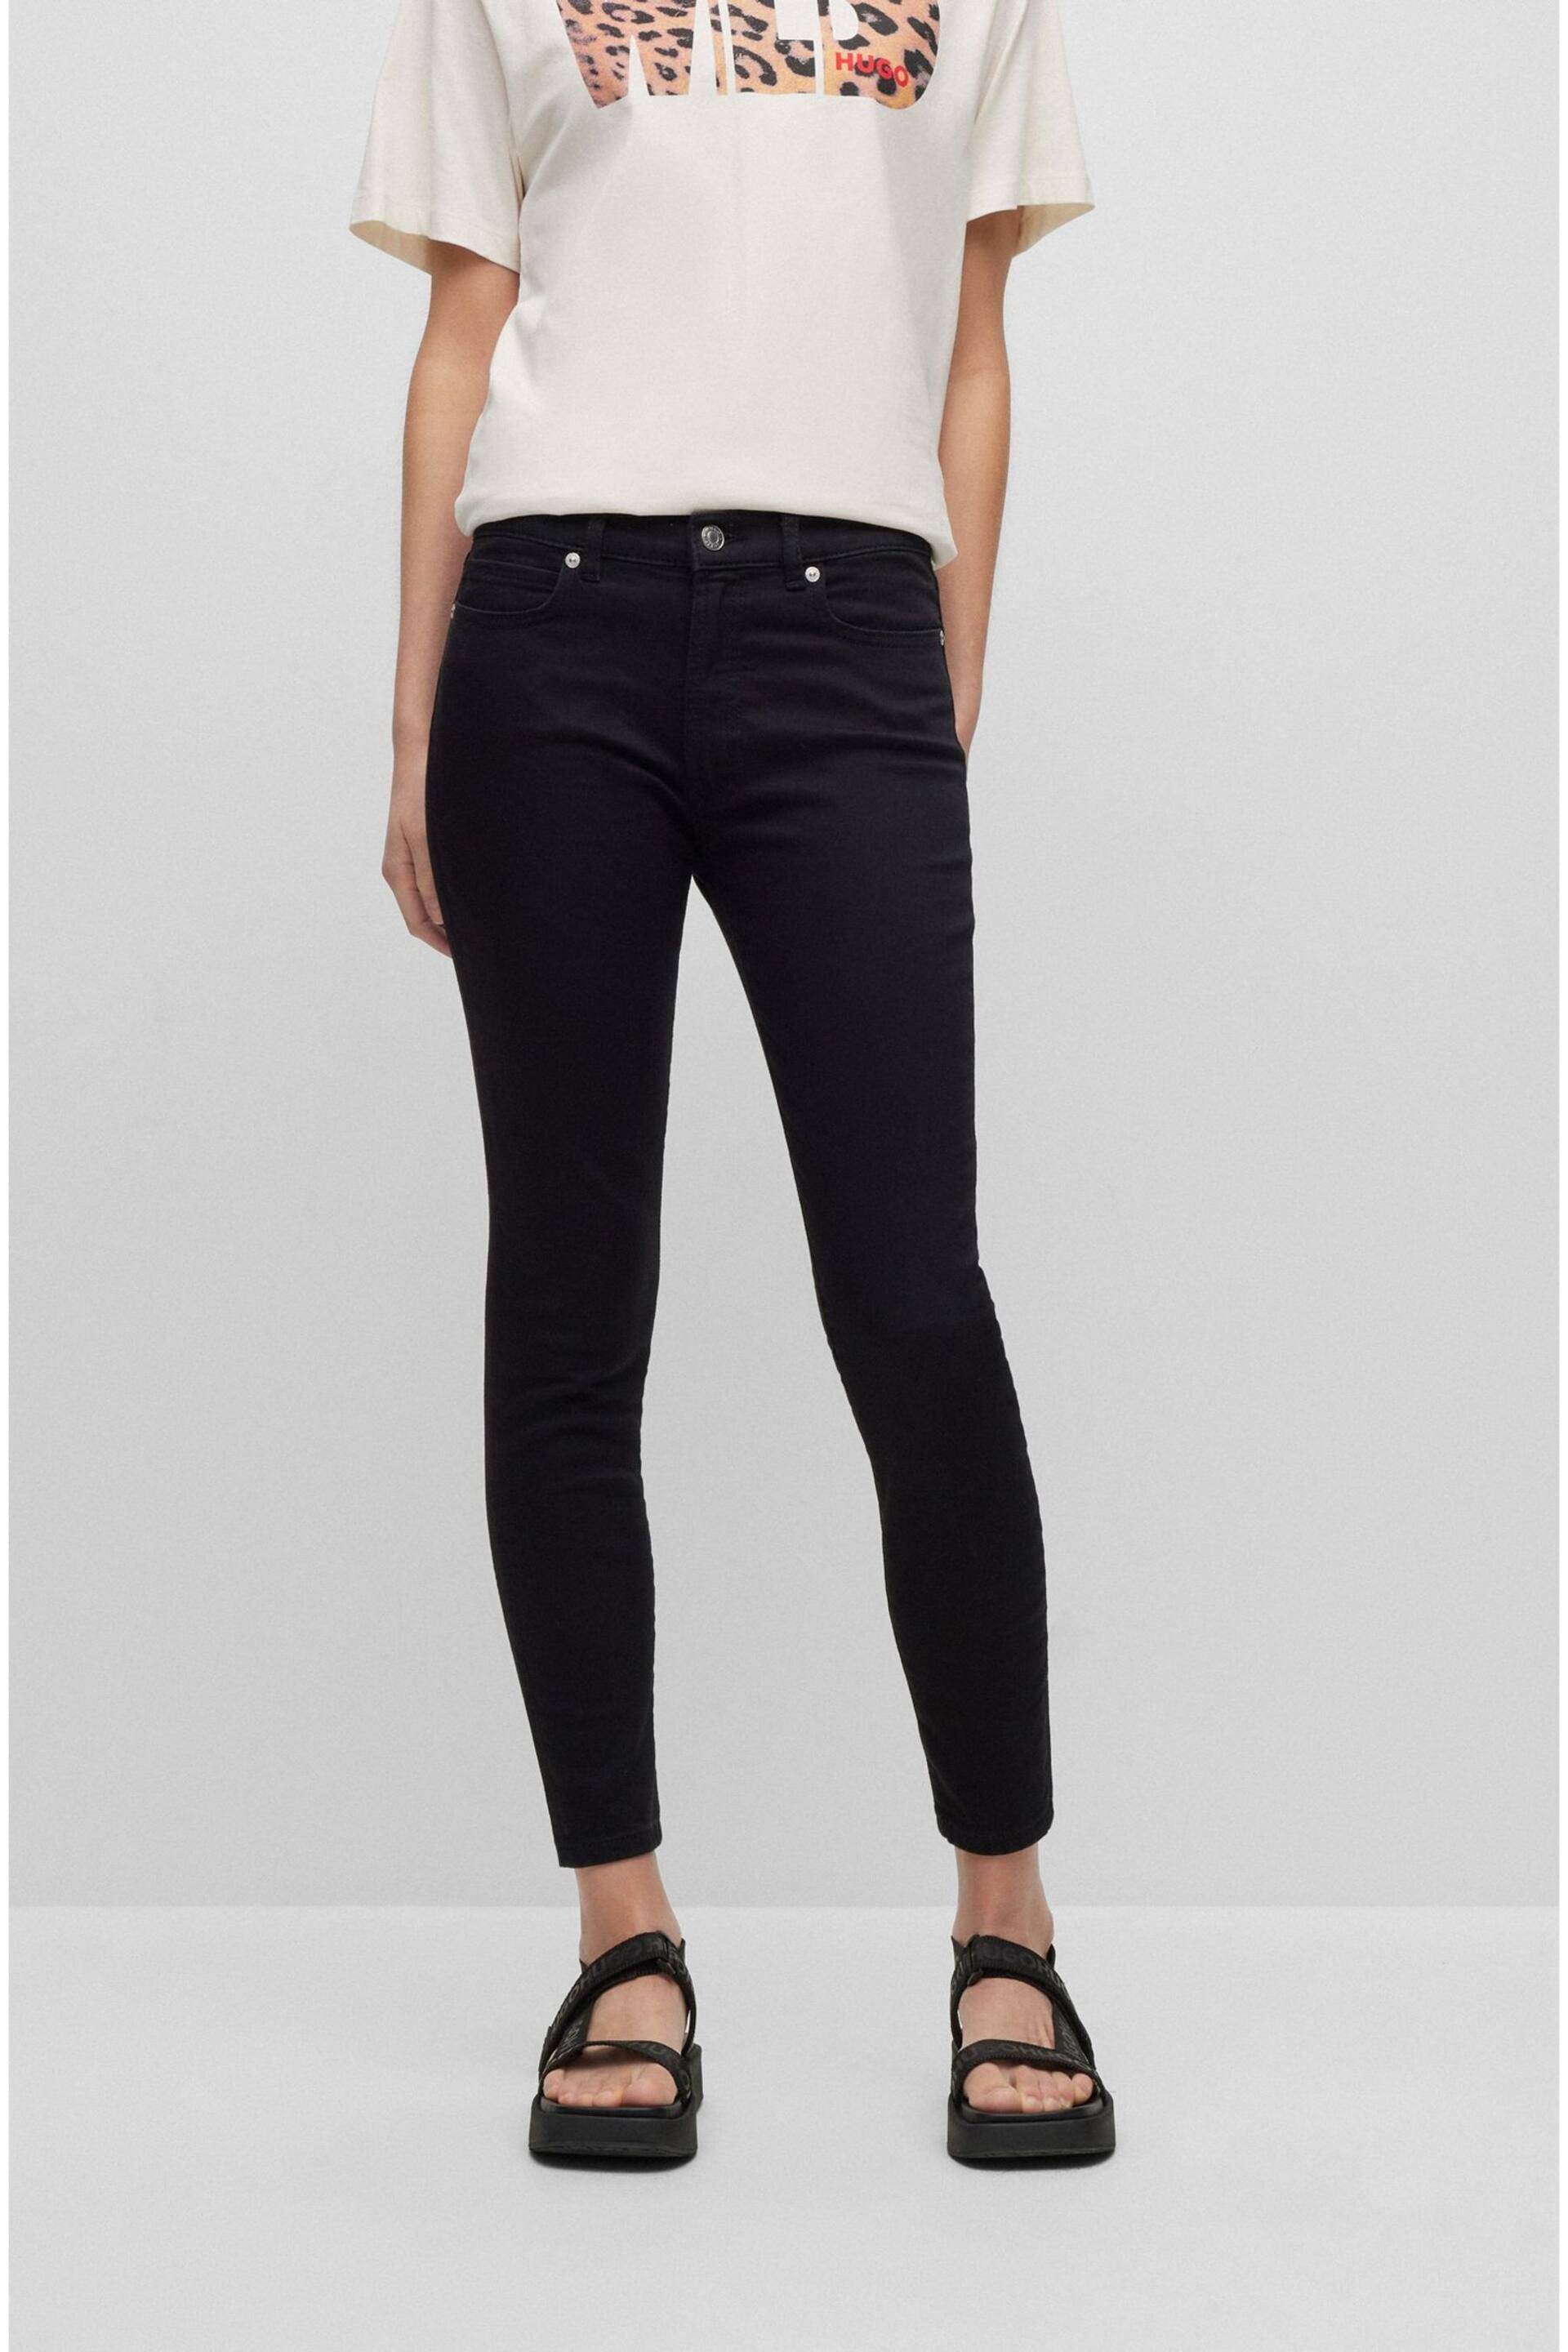 HUGO Black 932 Skinny Fit Stretch Jeans - Image 1 of 5